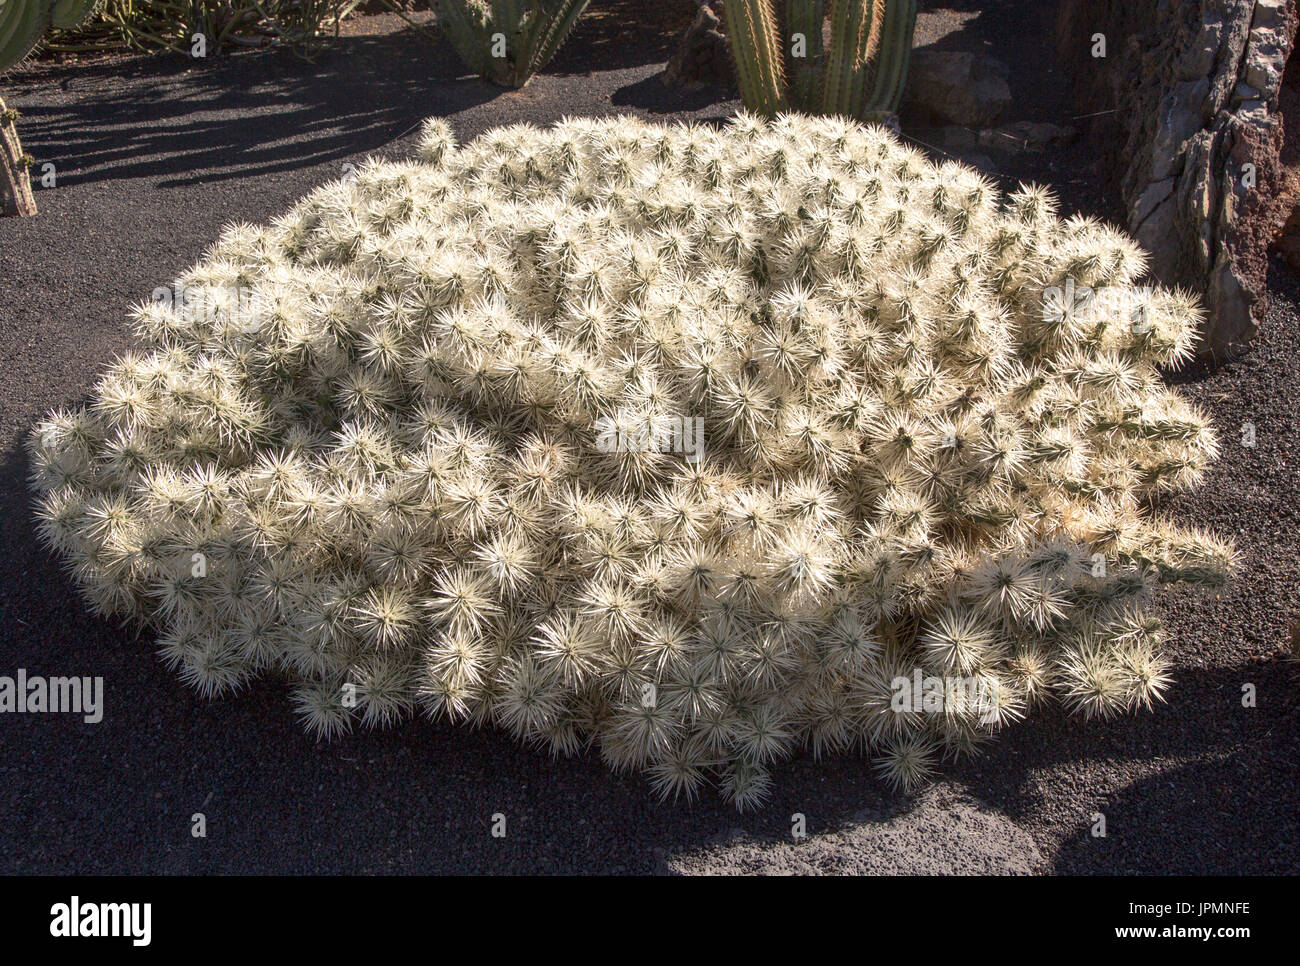 Cactaceae, Optunia Tunicata, from Mexico. Jardin de Cactus designed by César Manrique, Guatiza, Lanzarote, Canary Islands, Spain Stock Photo